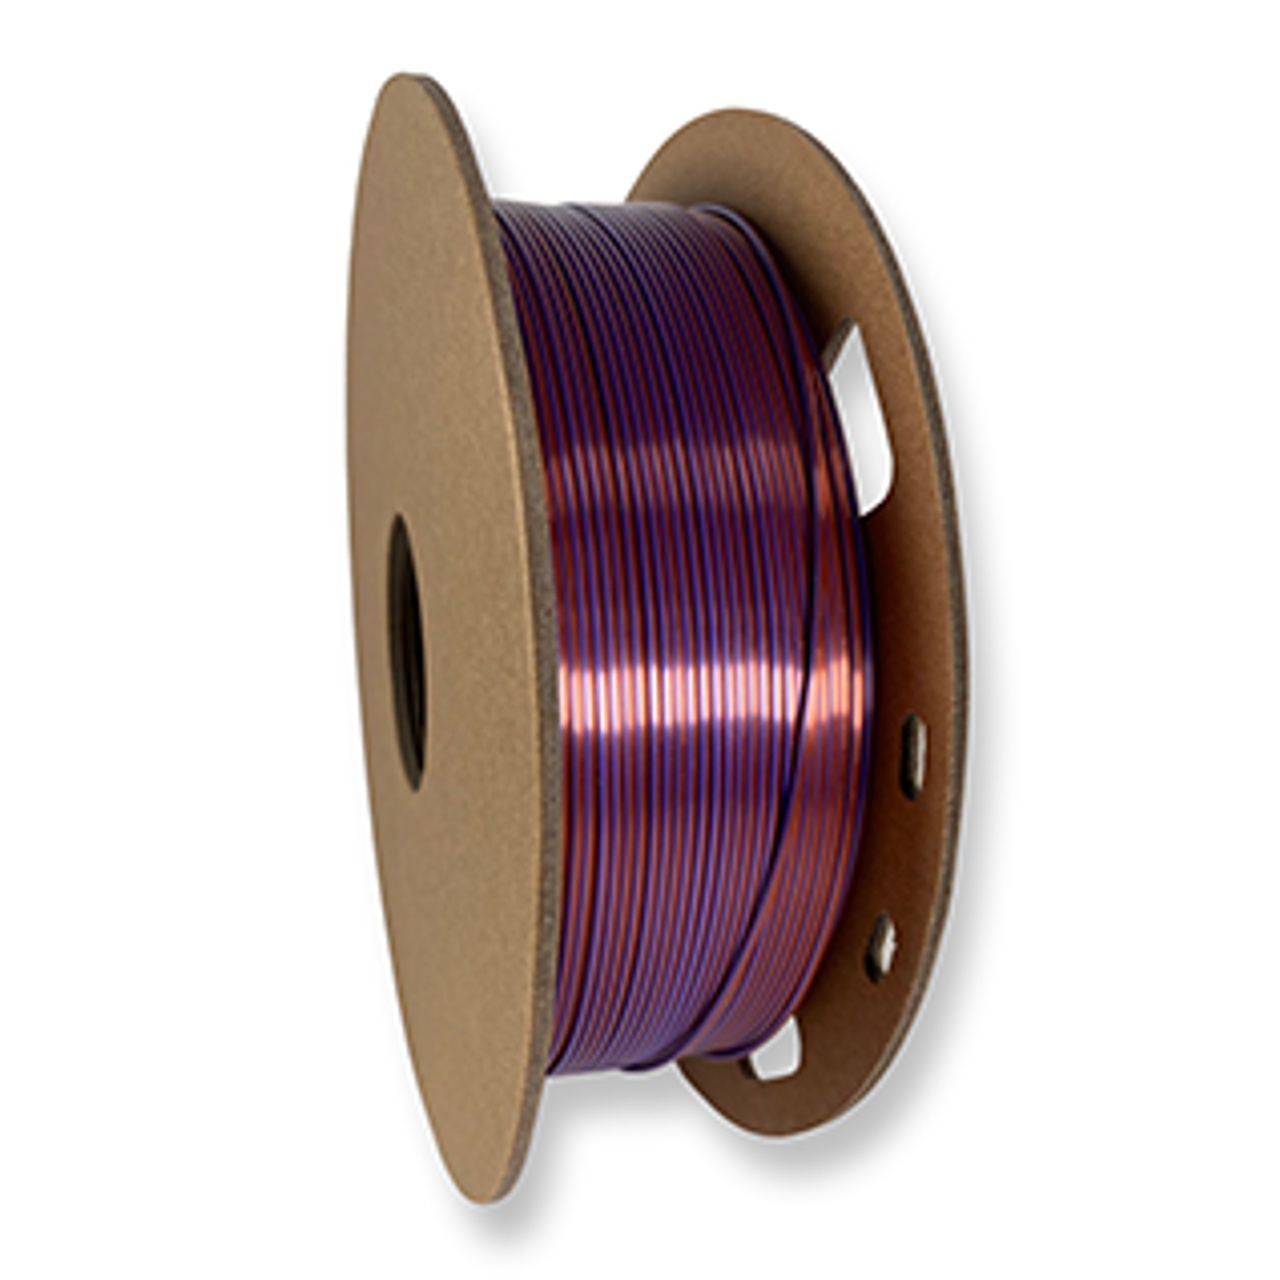 Fuse 3D Tri Colour Silk Gold-Copper-Purple 3D Printing Filament